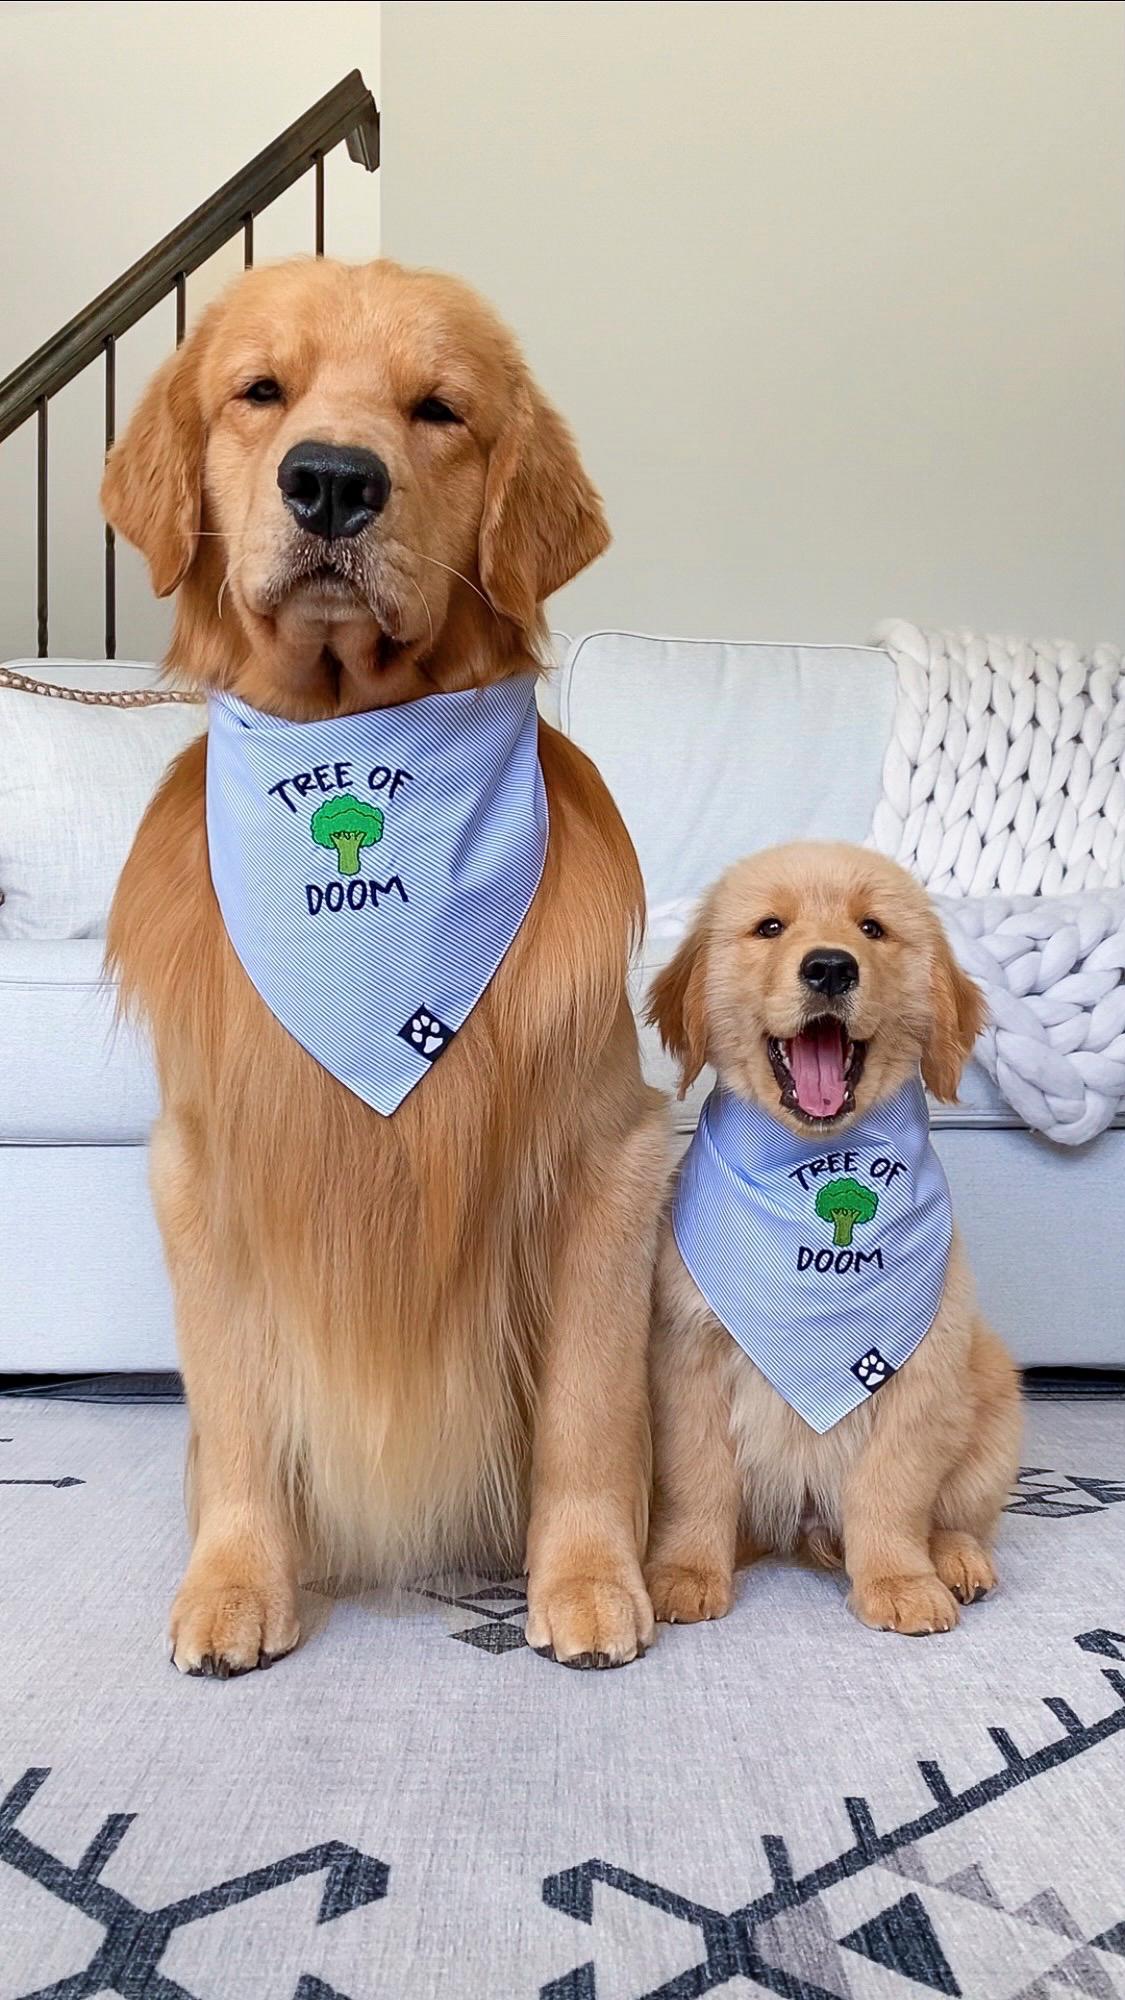 Tucker and puppy Todd. Ms. Budzyn says Tucker hates eating broccoli, “the tree of doom.” (Courtesy of Courtney Budzyn)